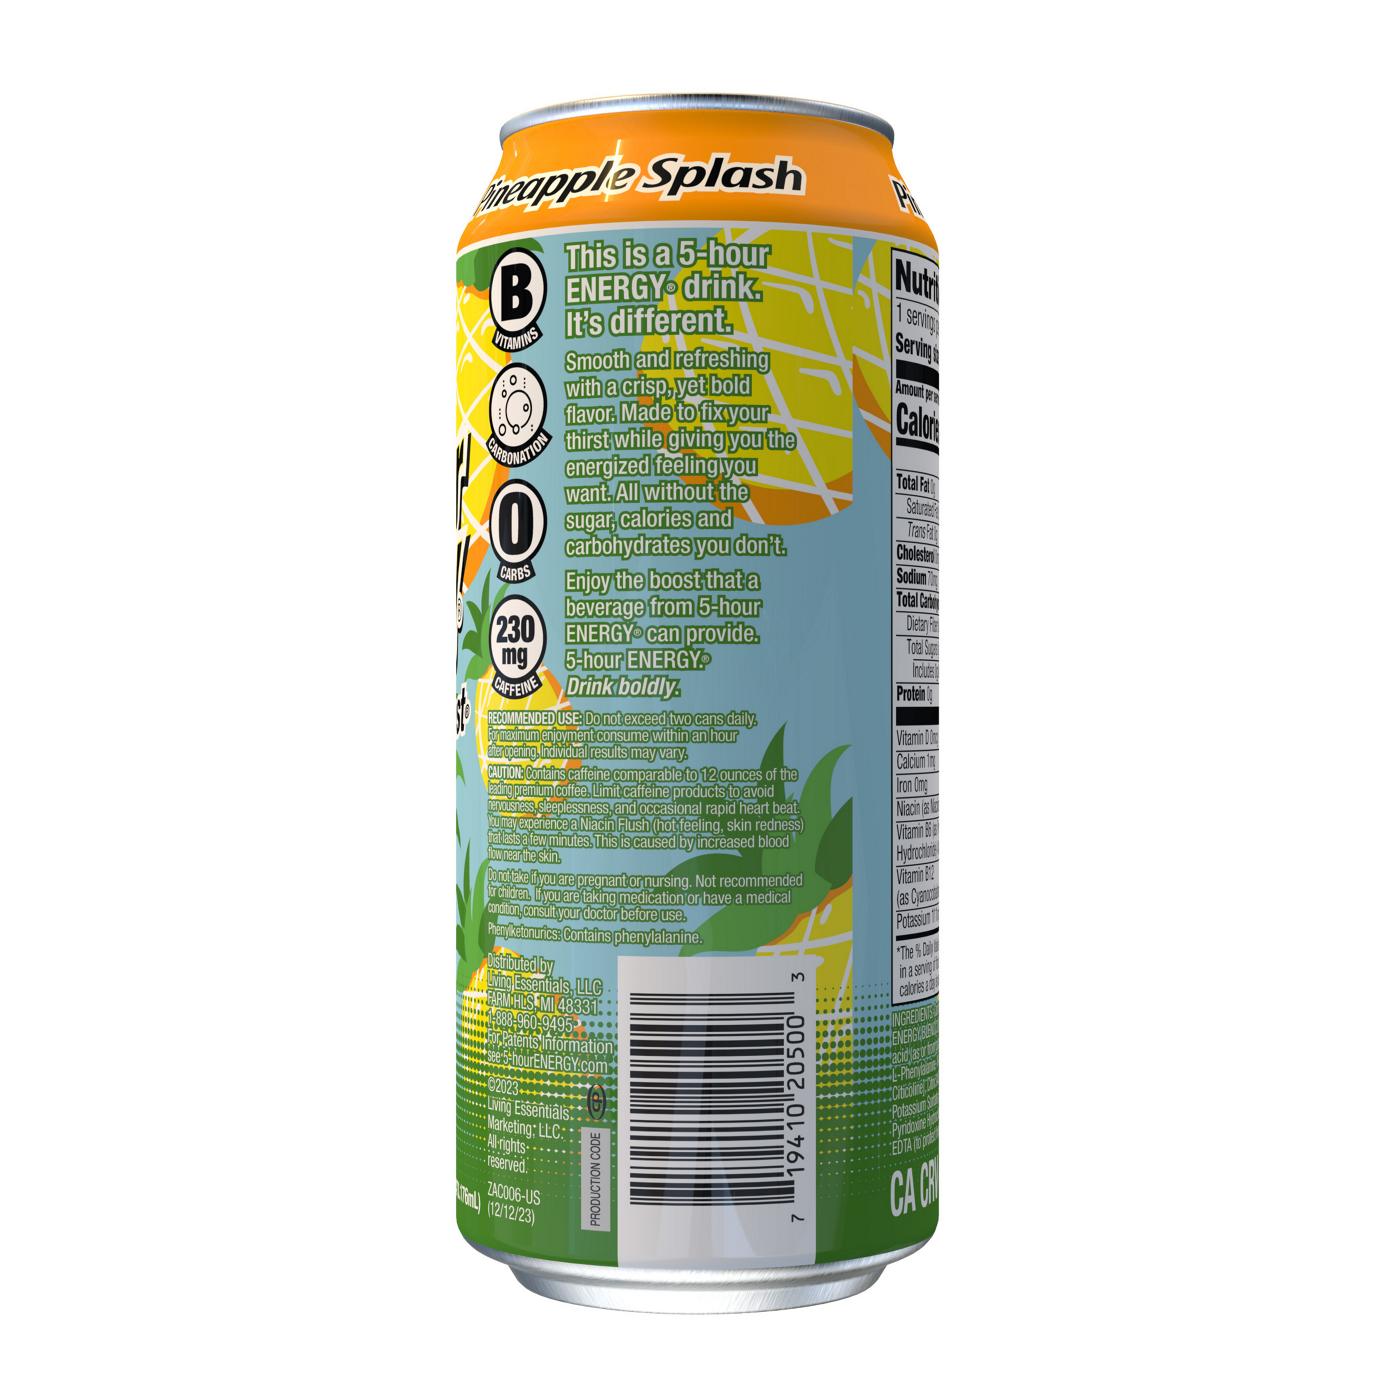 5-hour ENERGY Extra Strength Energy Drink - Pineapple Splash; image 3 of 3